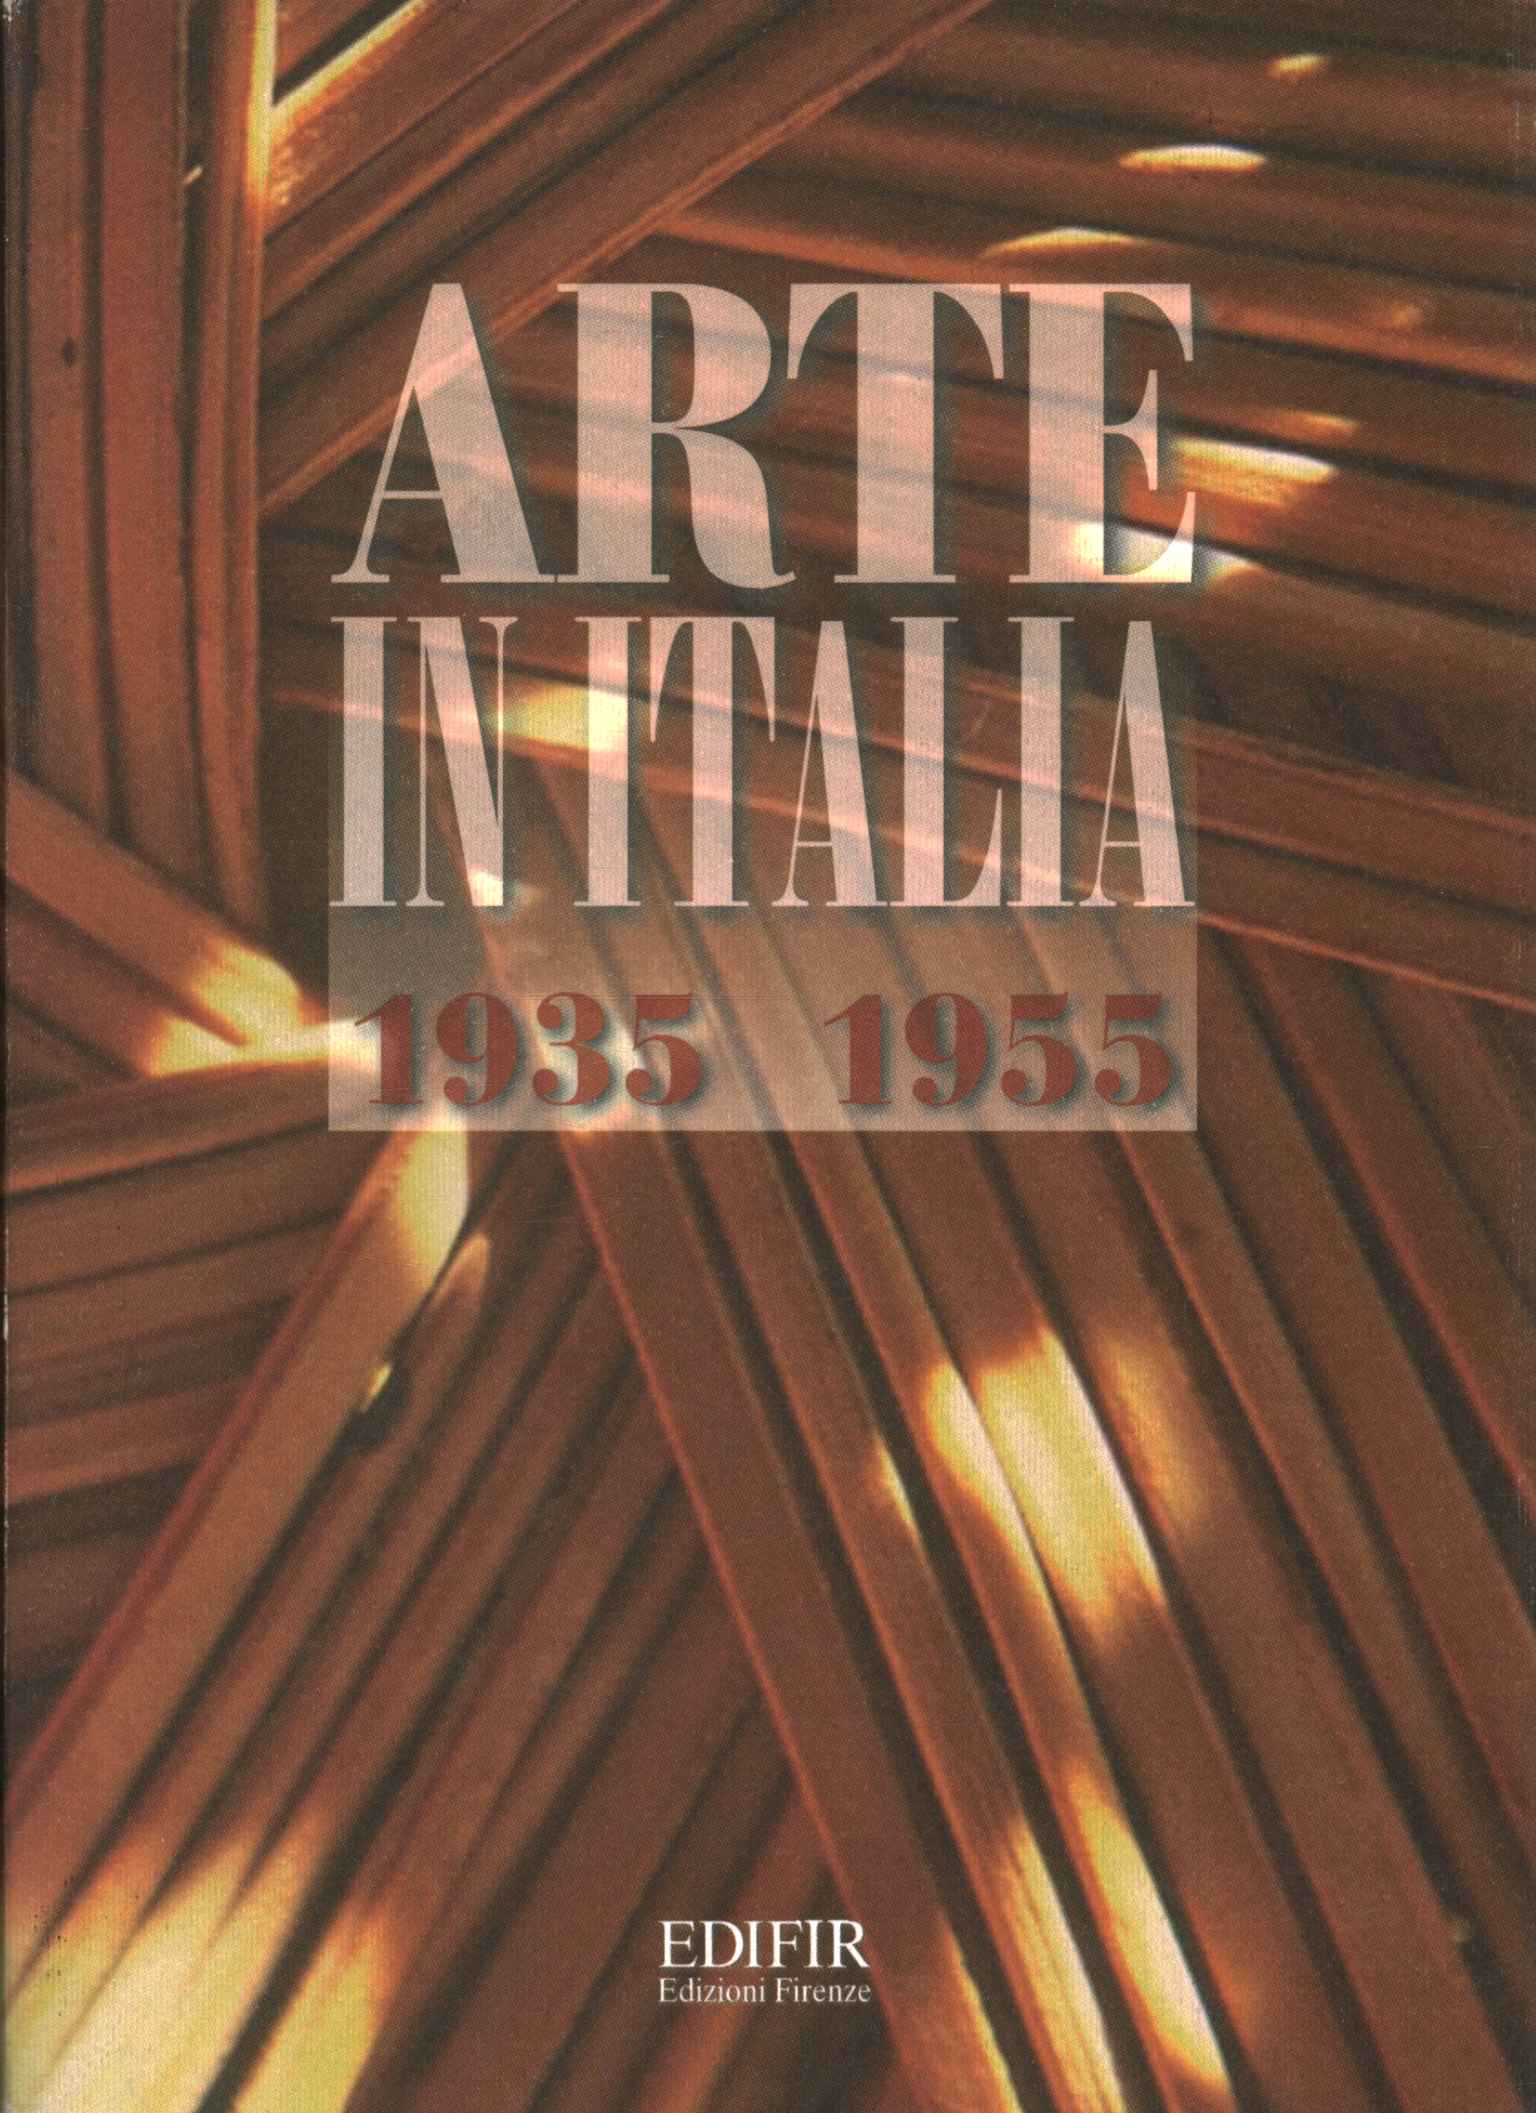 Kunst in Italien 1935-1955